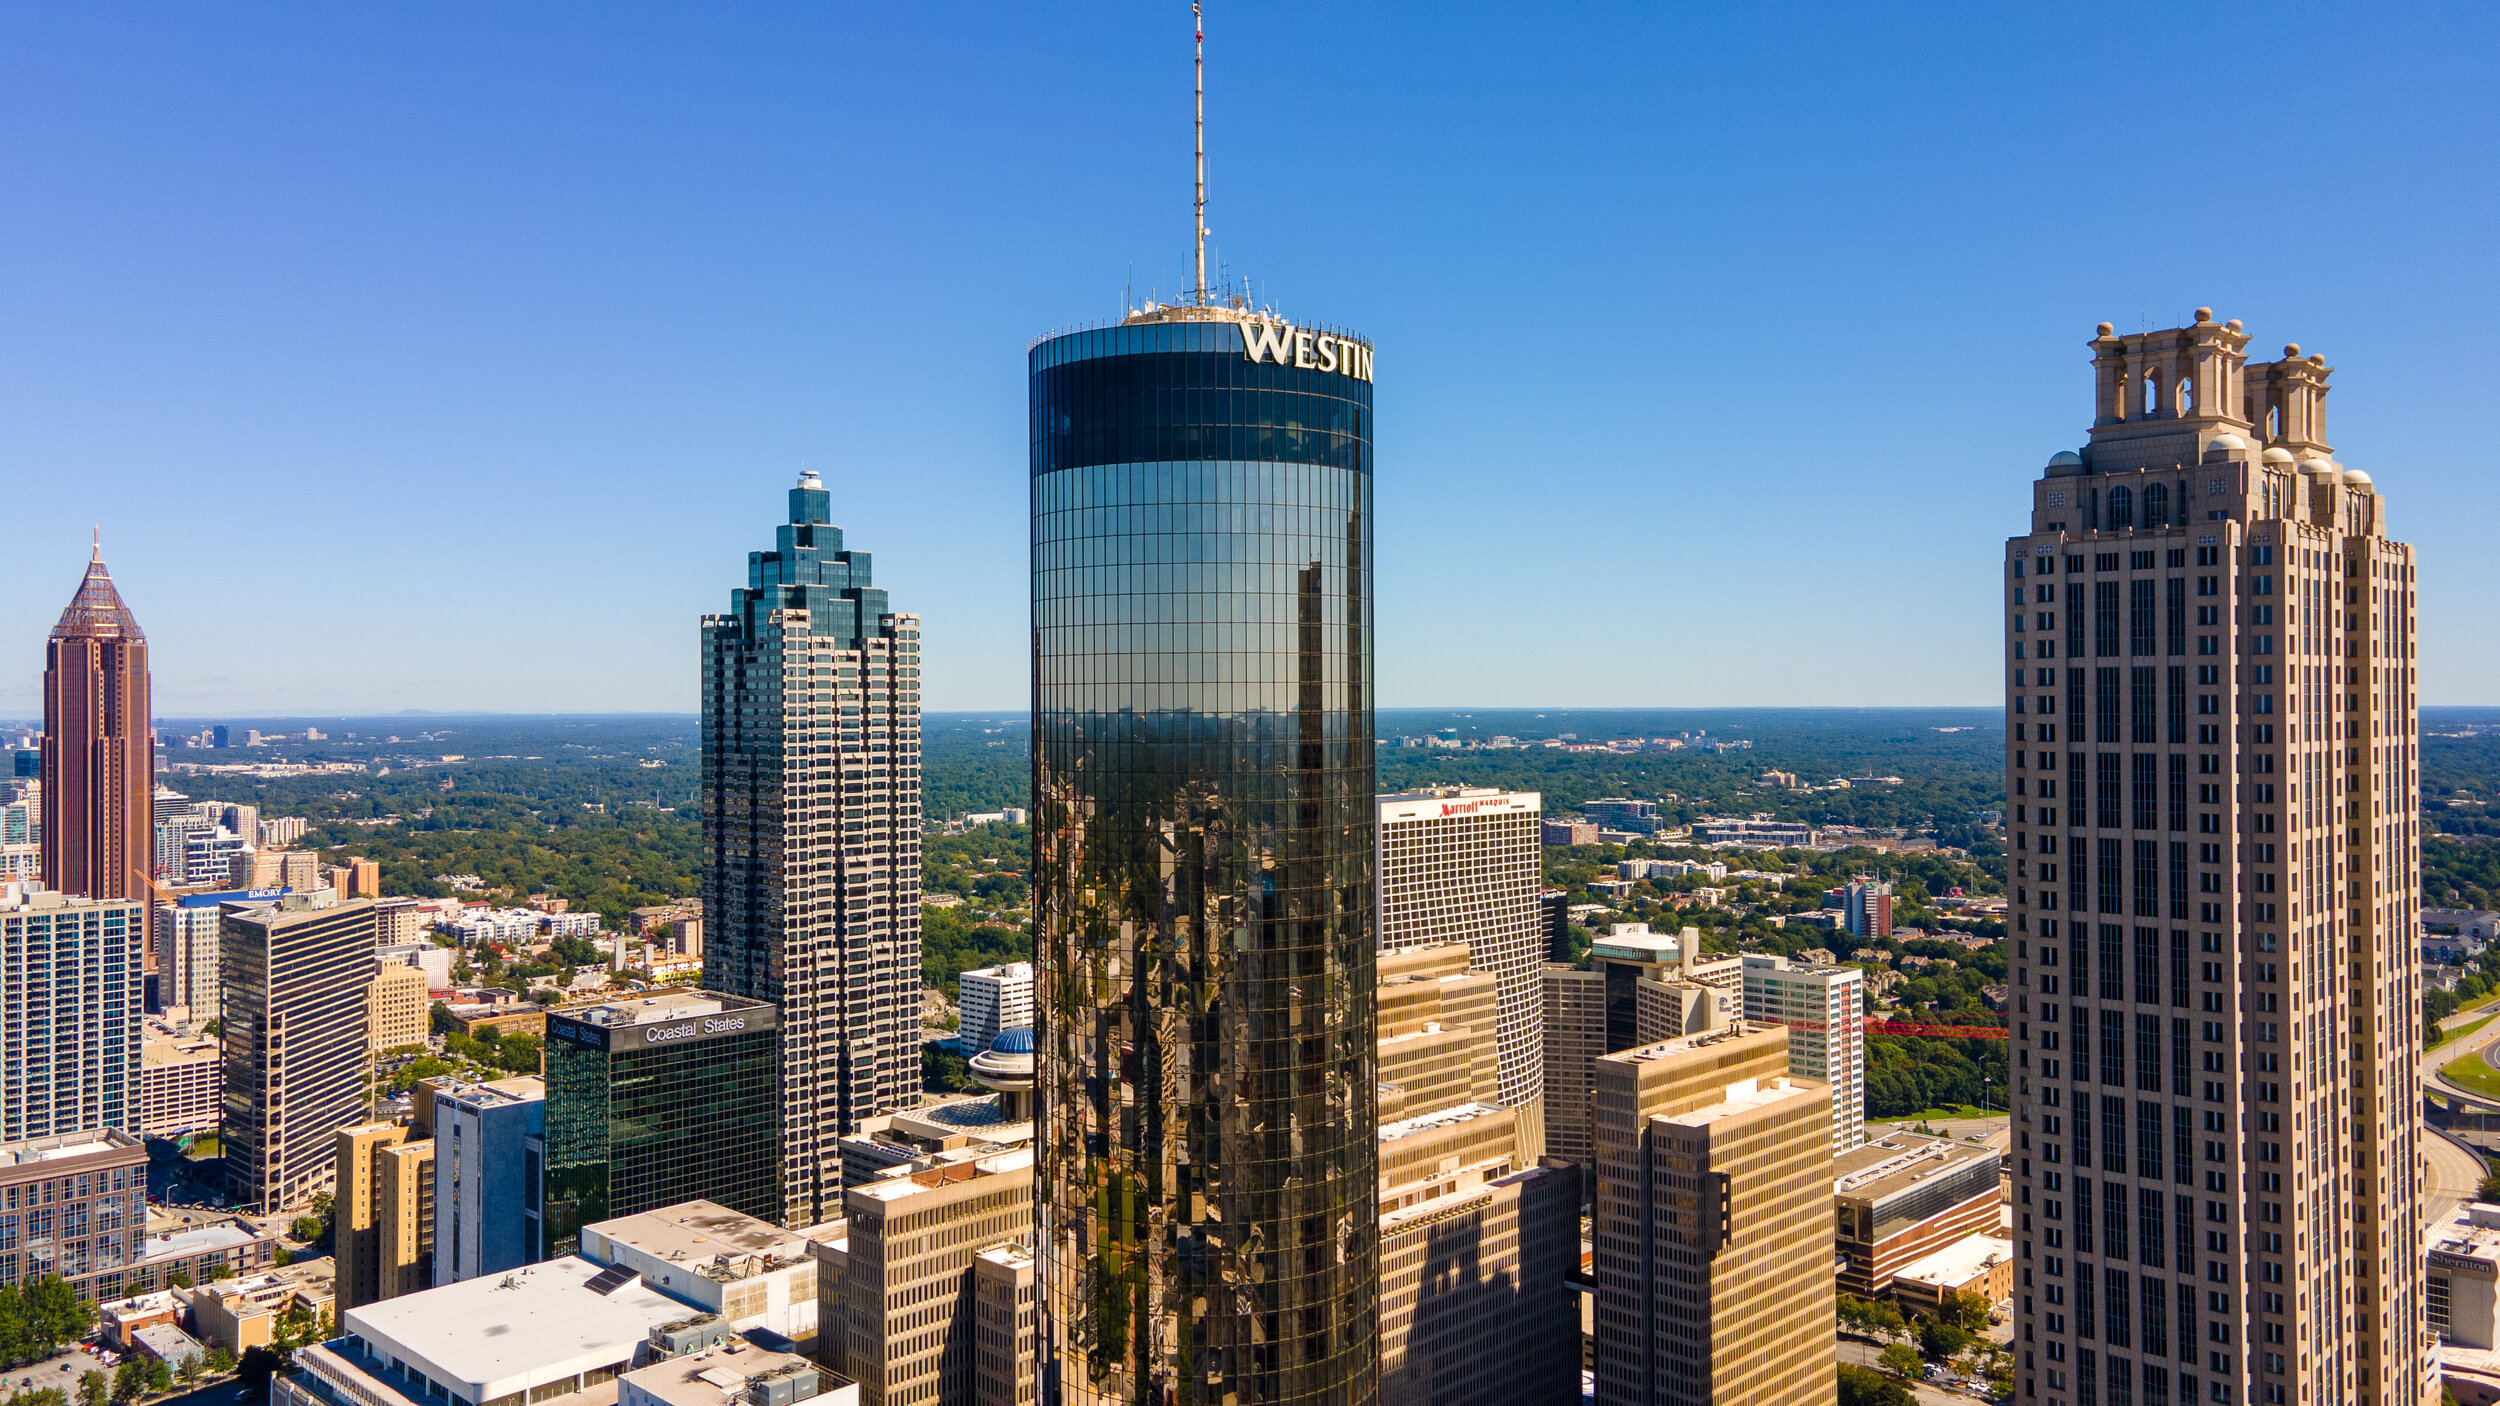 Westin Hotel Aerial Drone Real Estate Atlanta Virtual Tour